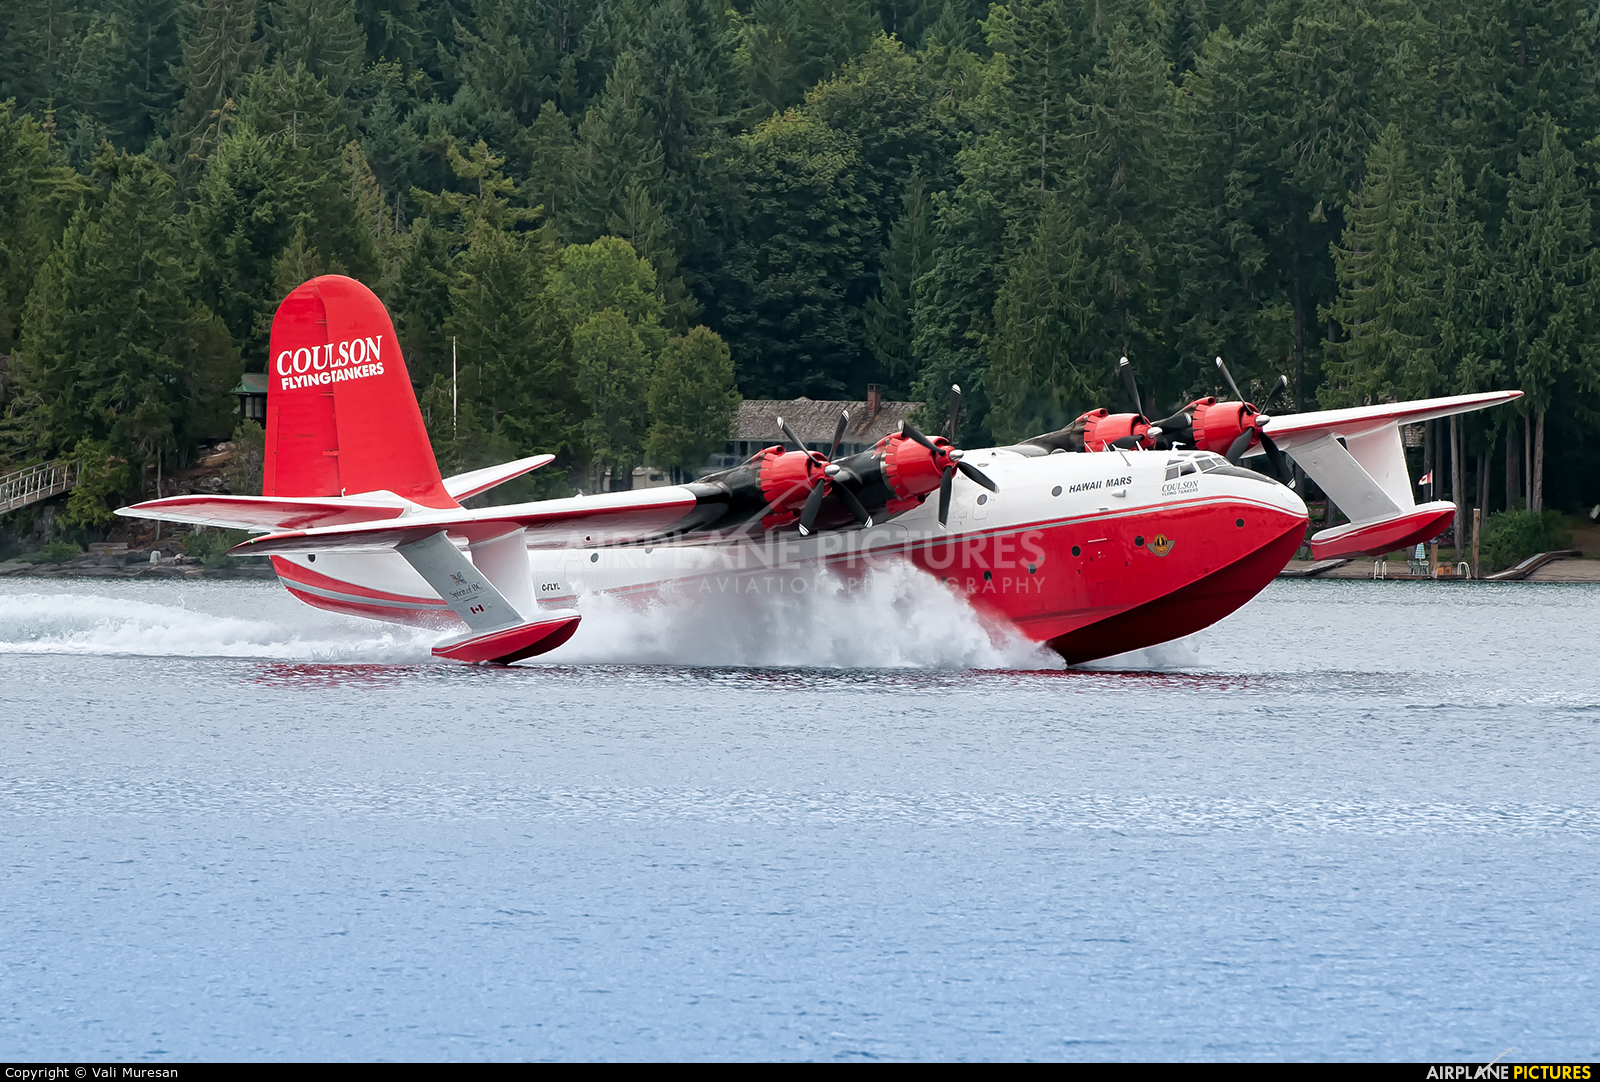 Coulson Flying Tankers C-FLYL aircraft at Port Alberni - Sproat Lake, BC